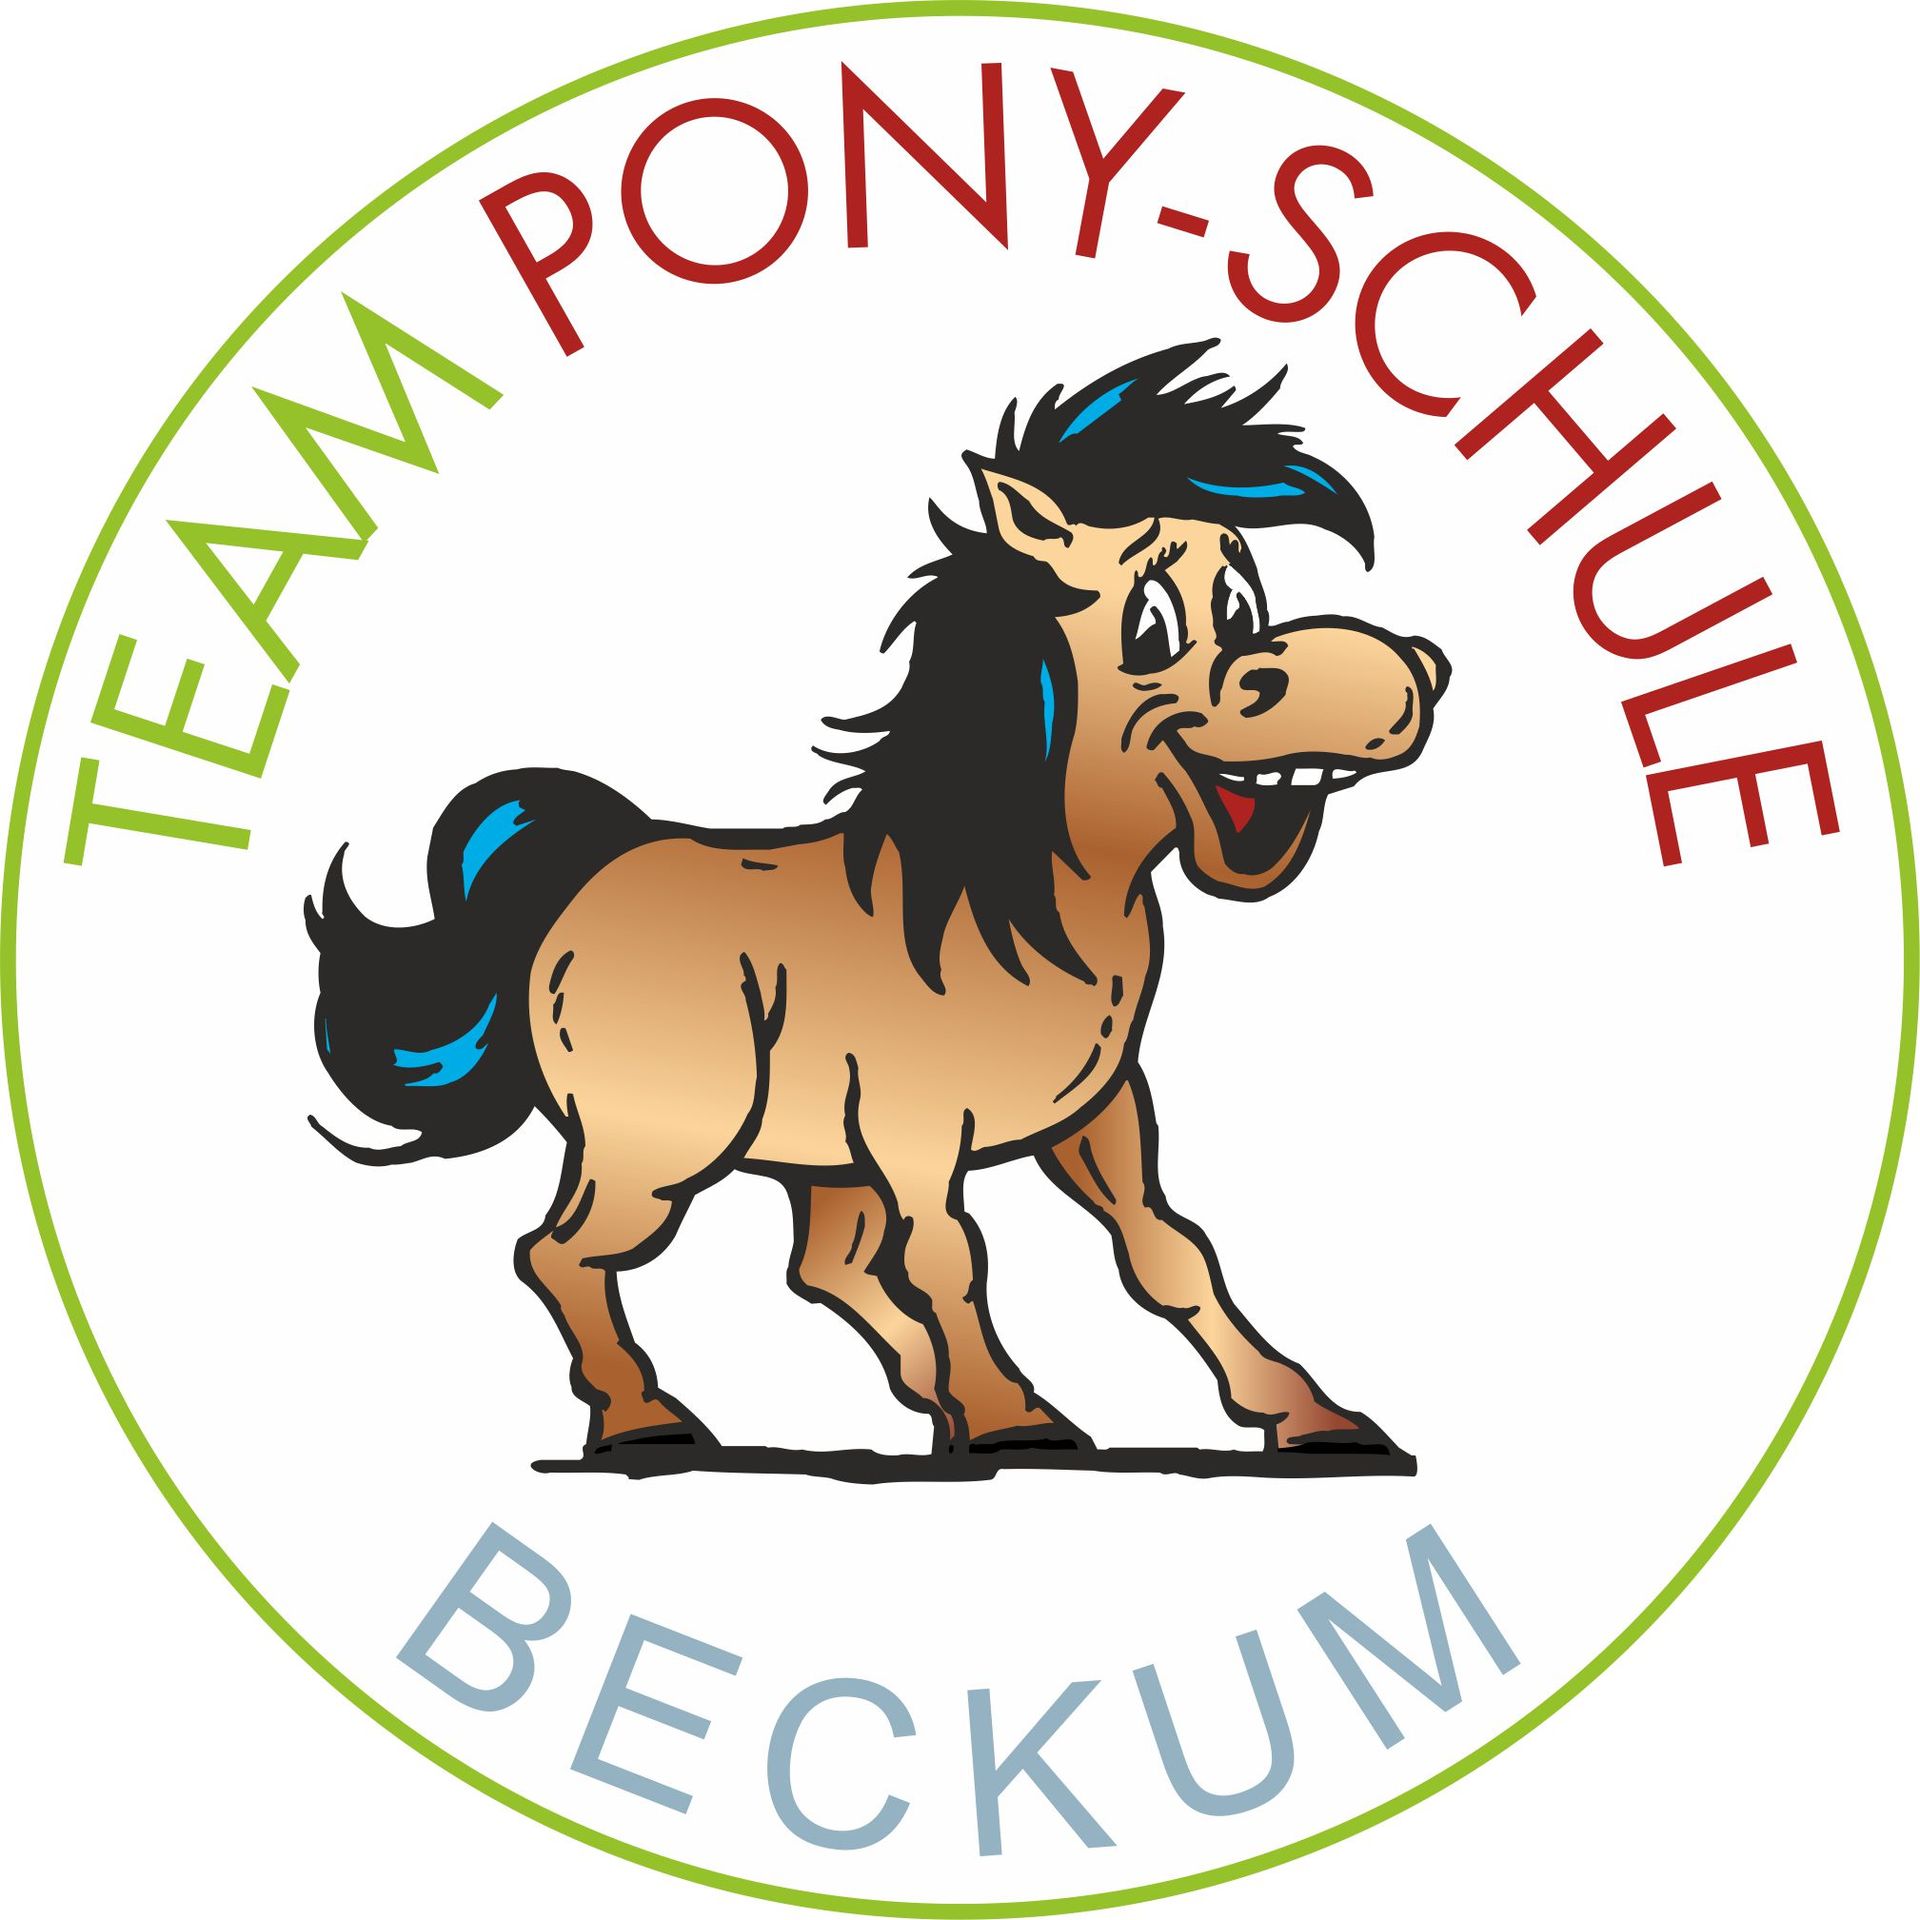 Team Ponyschule Beckum